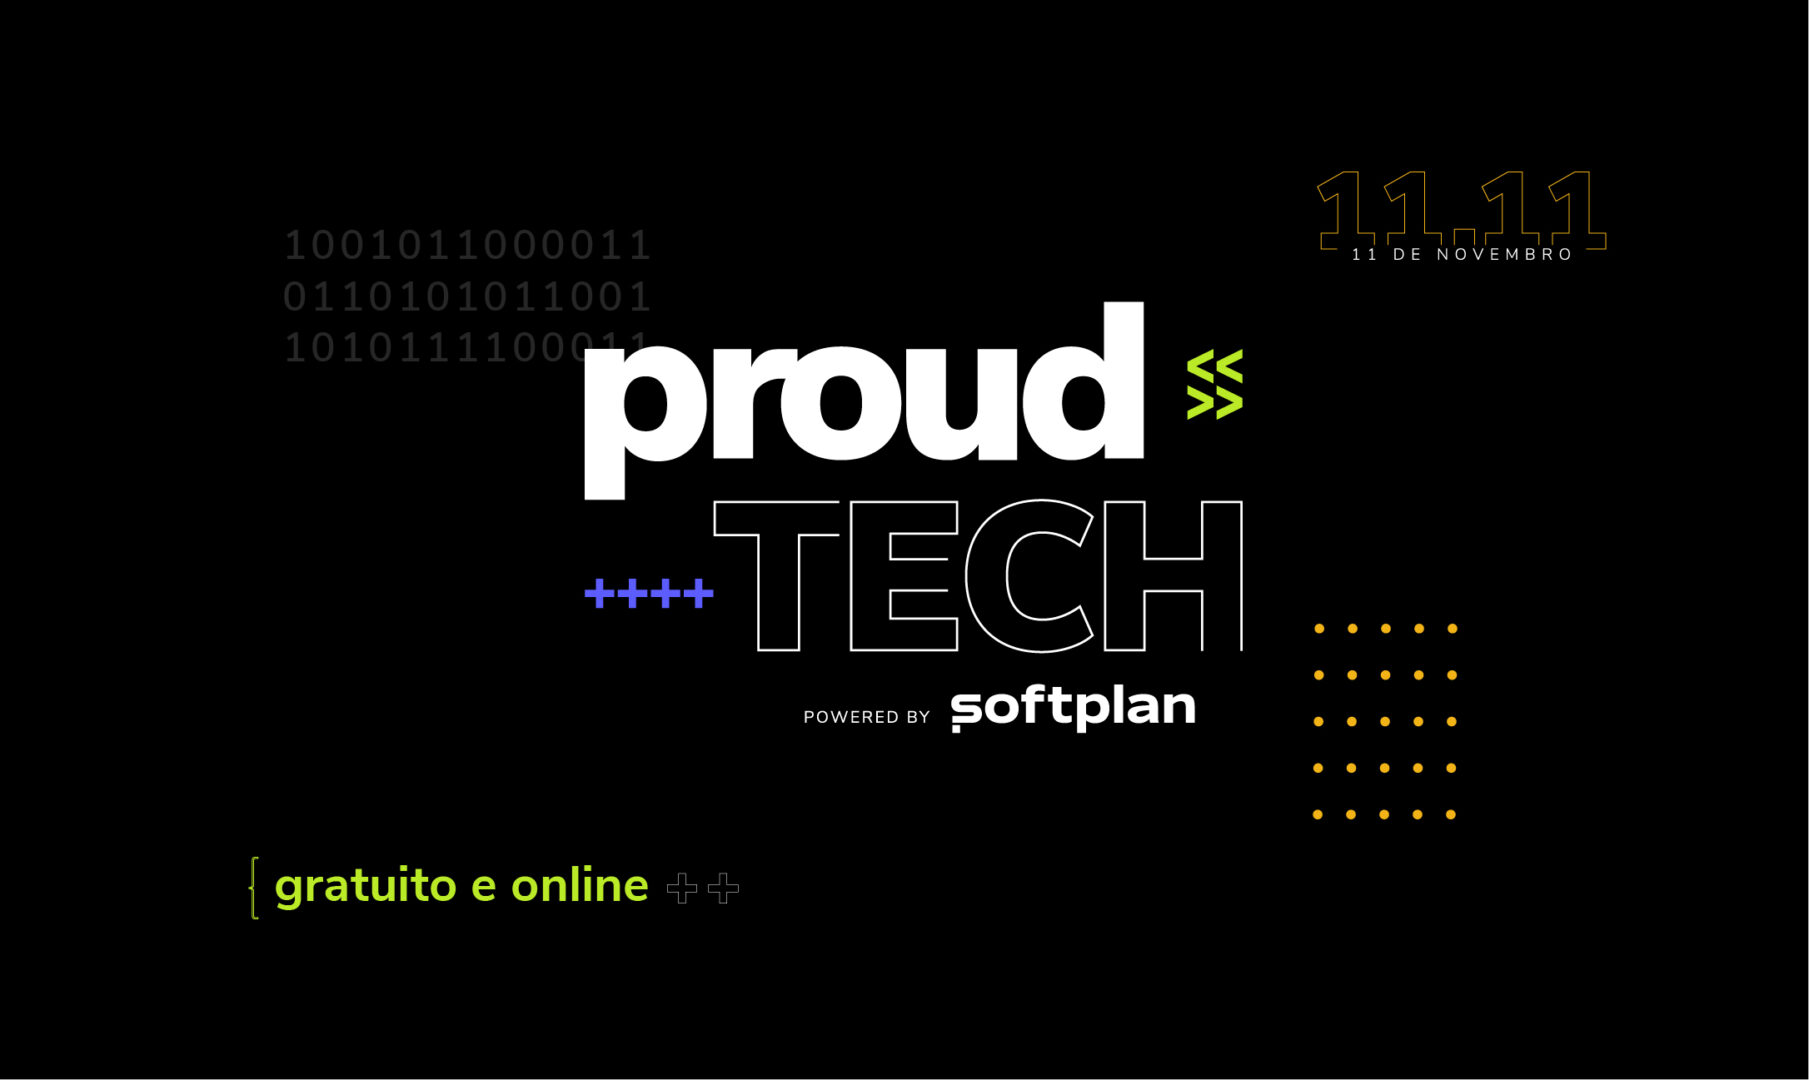 Proud Tech: An event for technology lovers